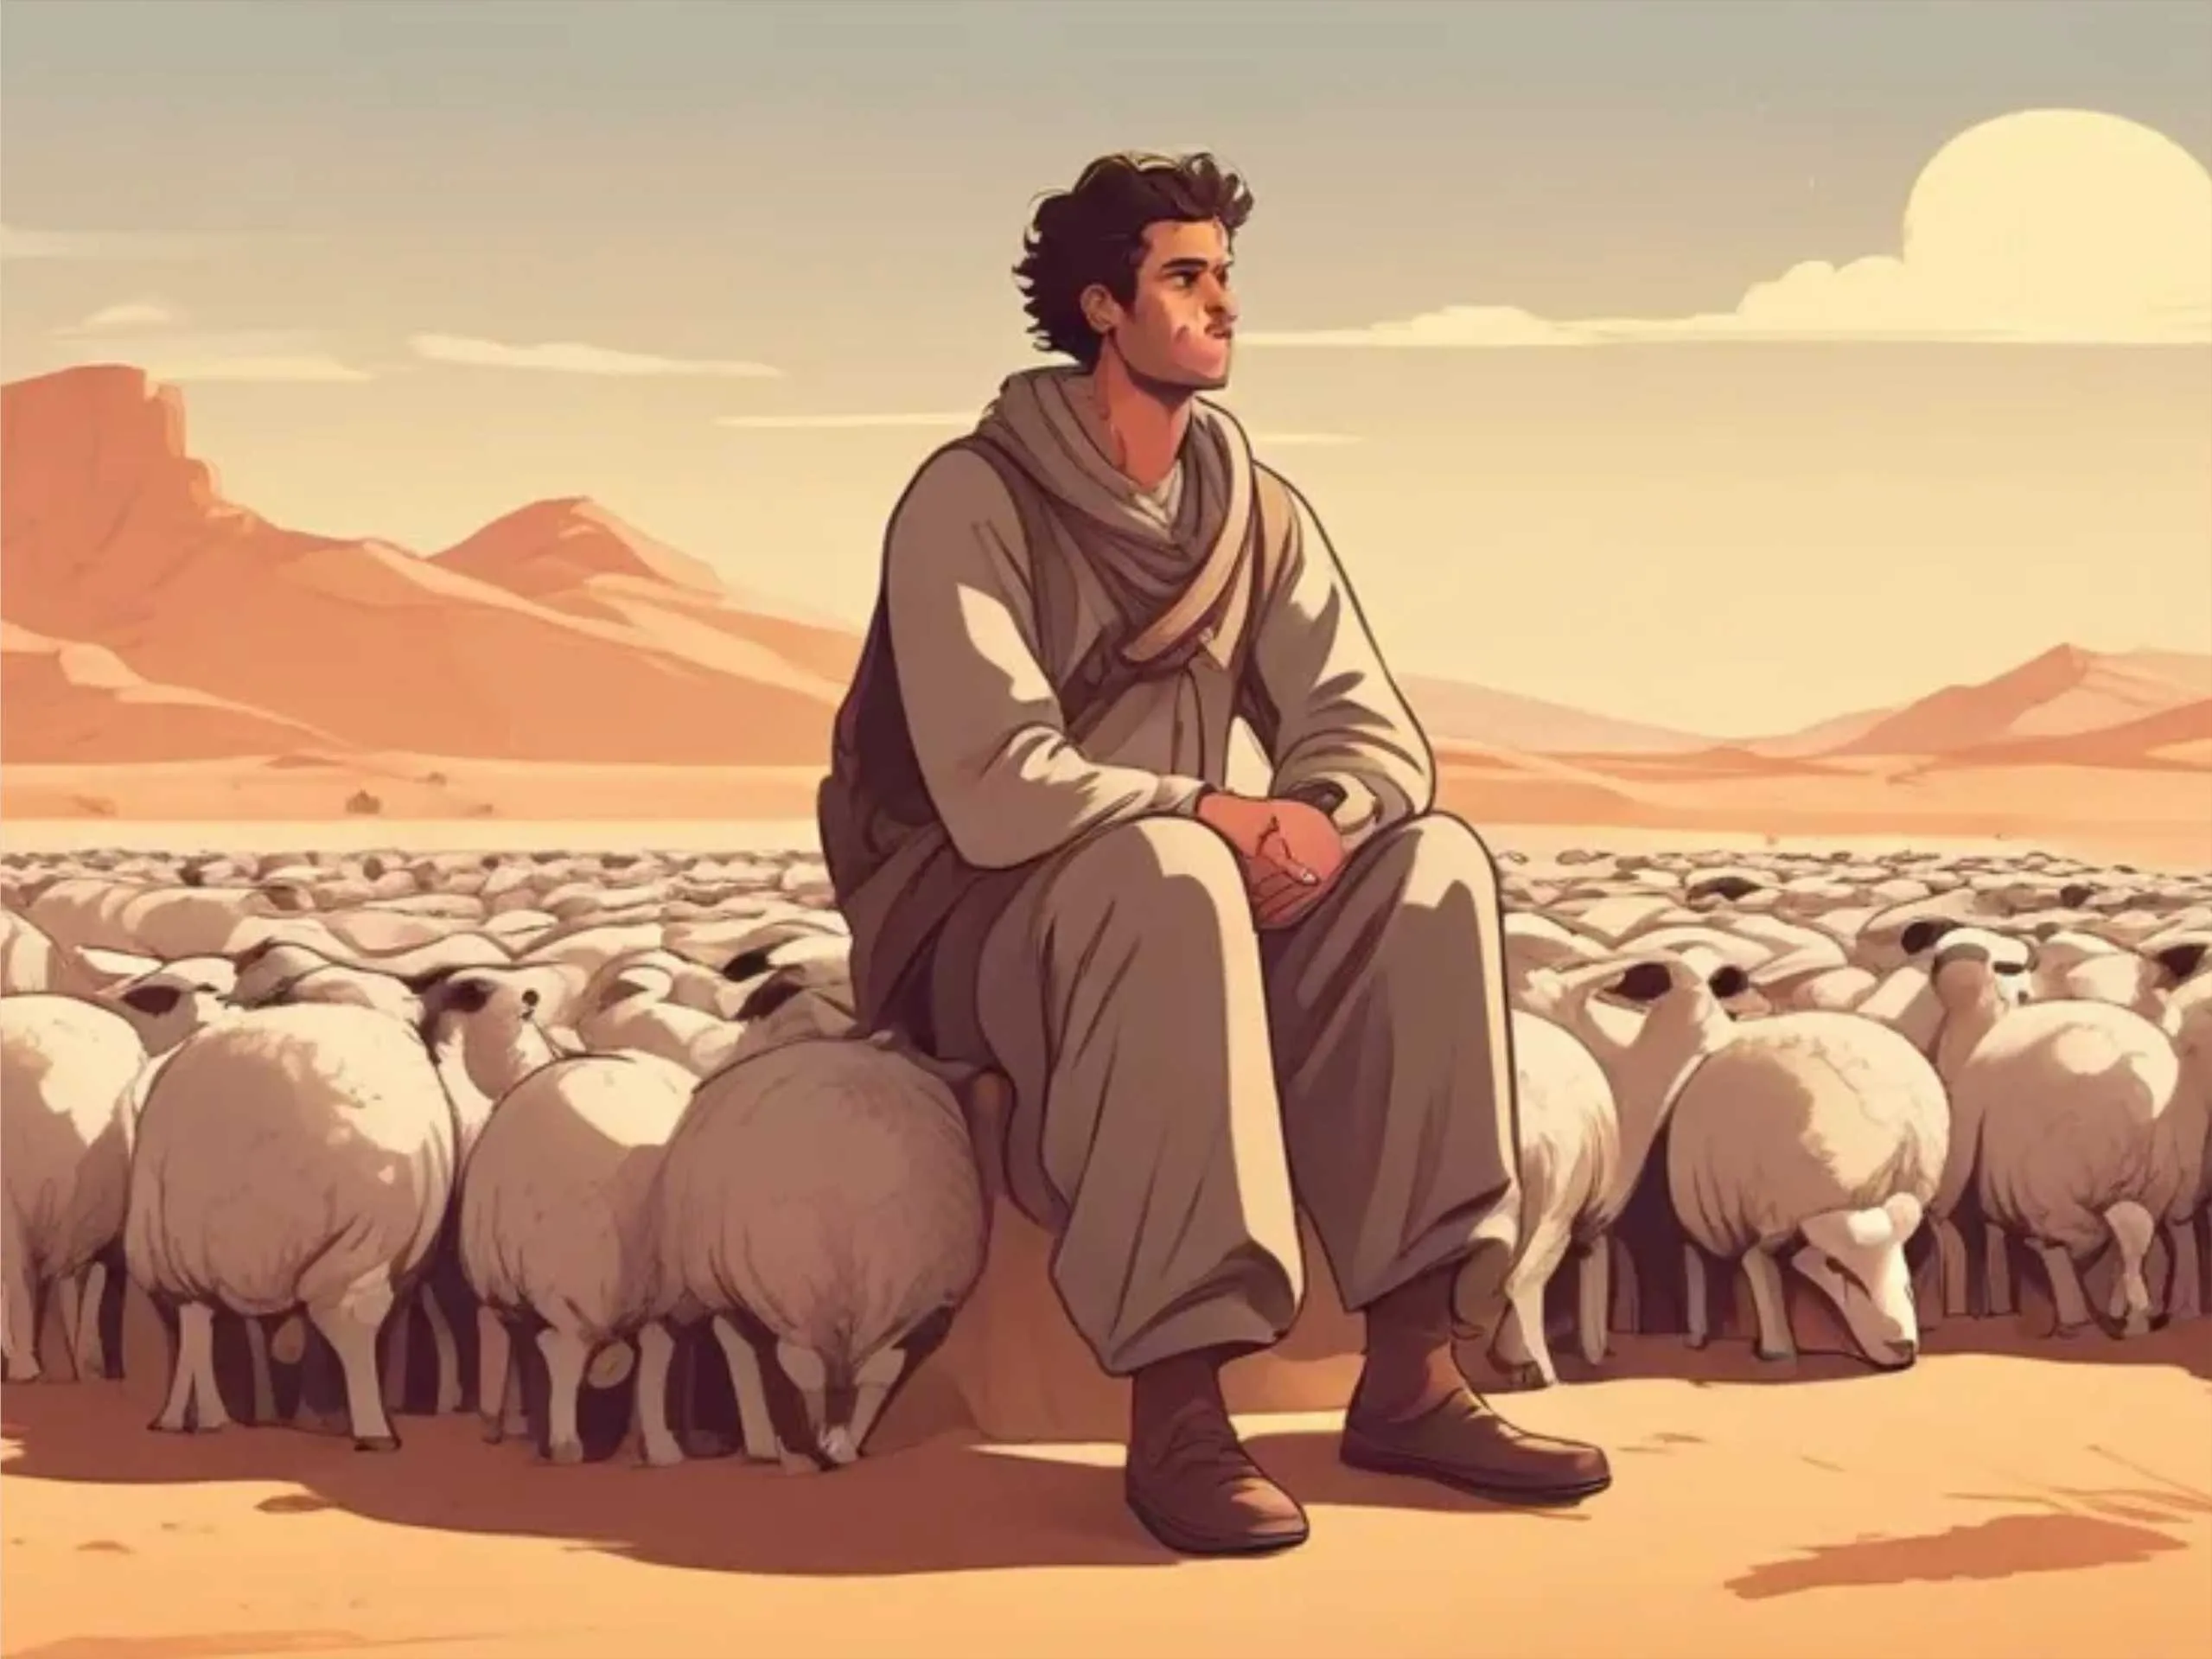 Shephered sitting in desert cartoon image